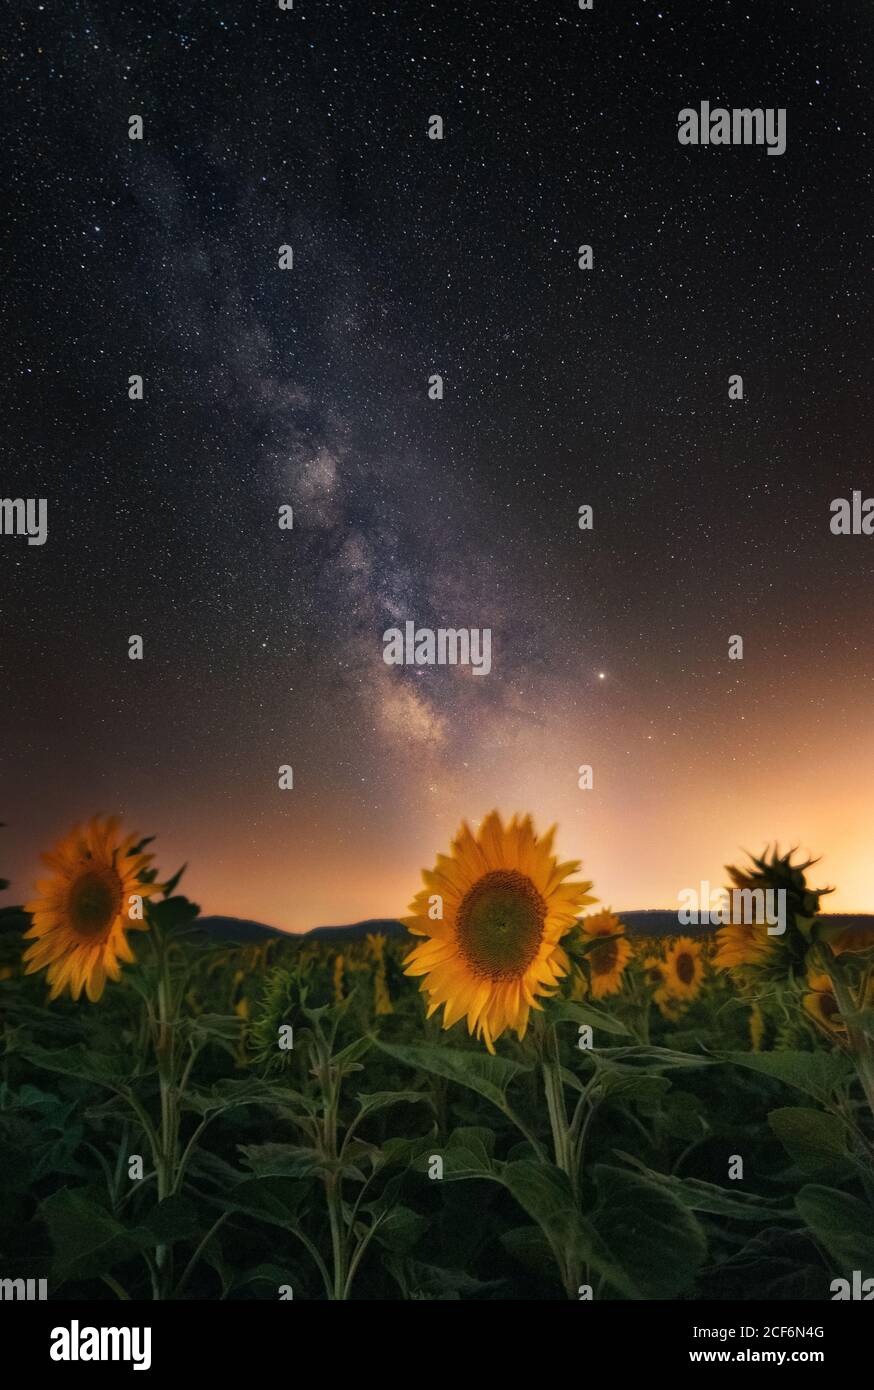 Ripening sunflower field under shining stars on sky at night Stock Photo